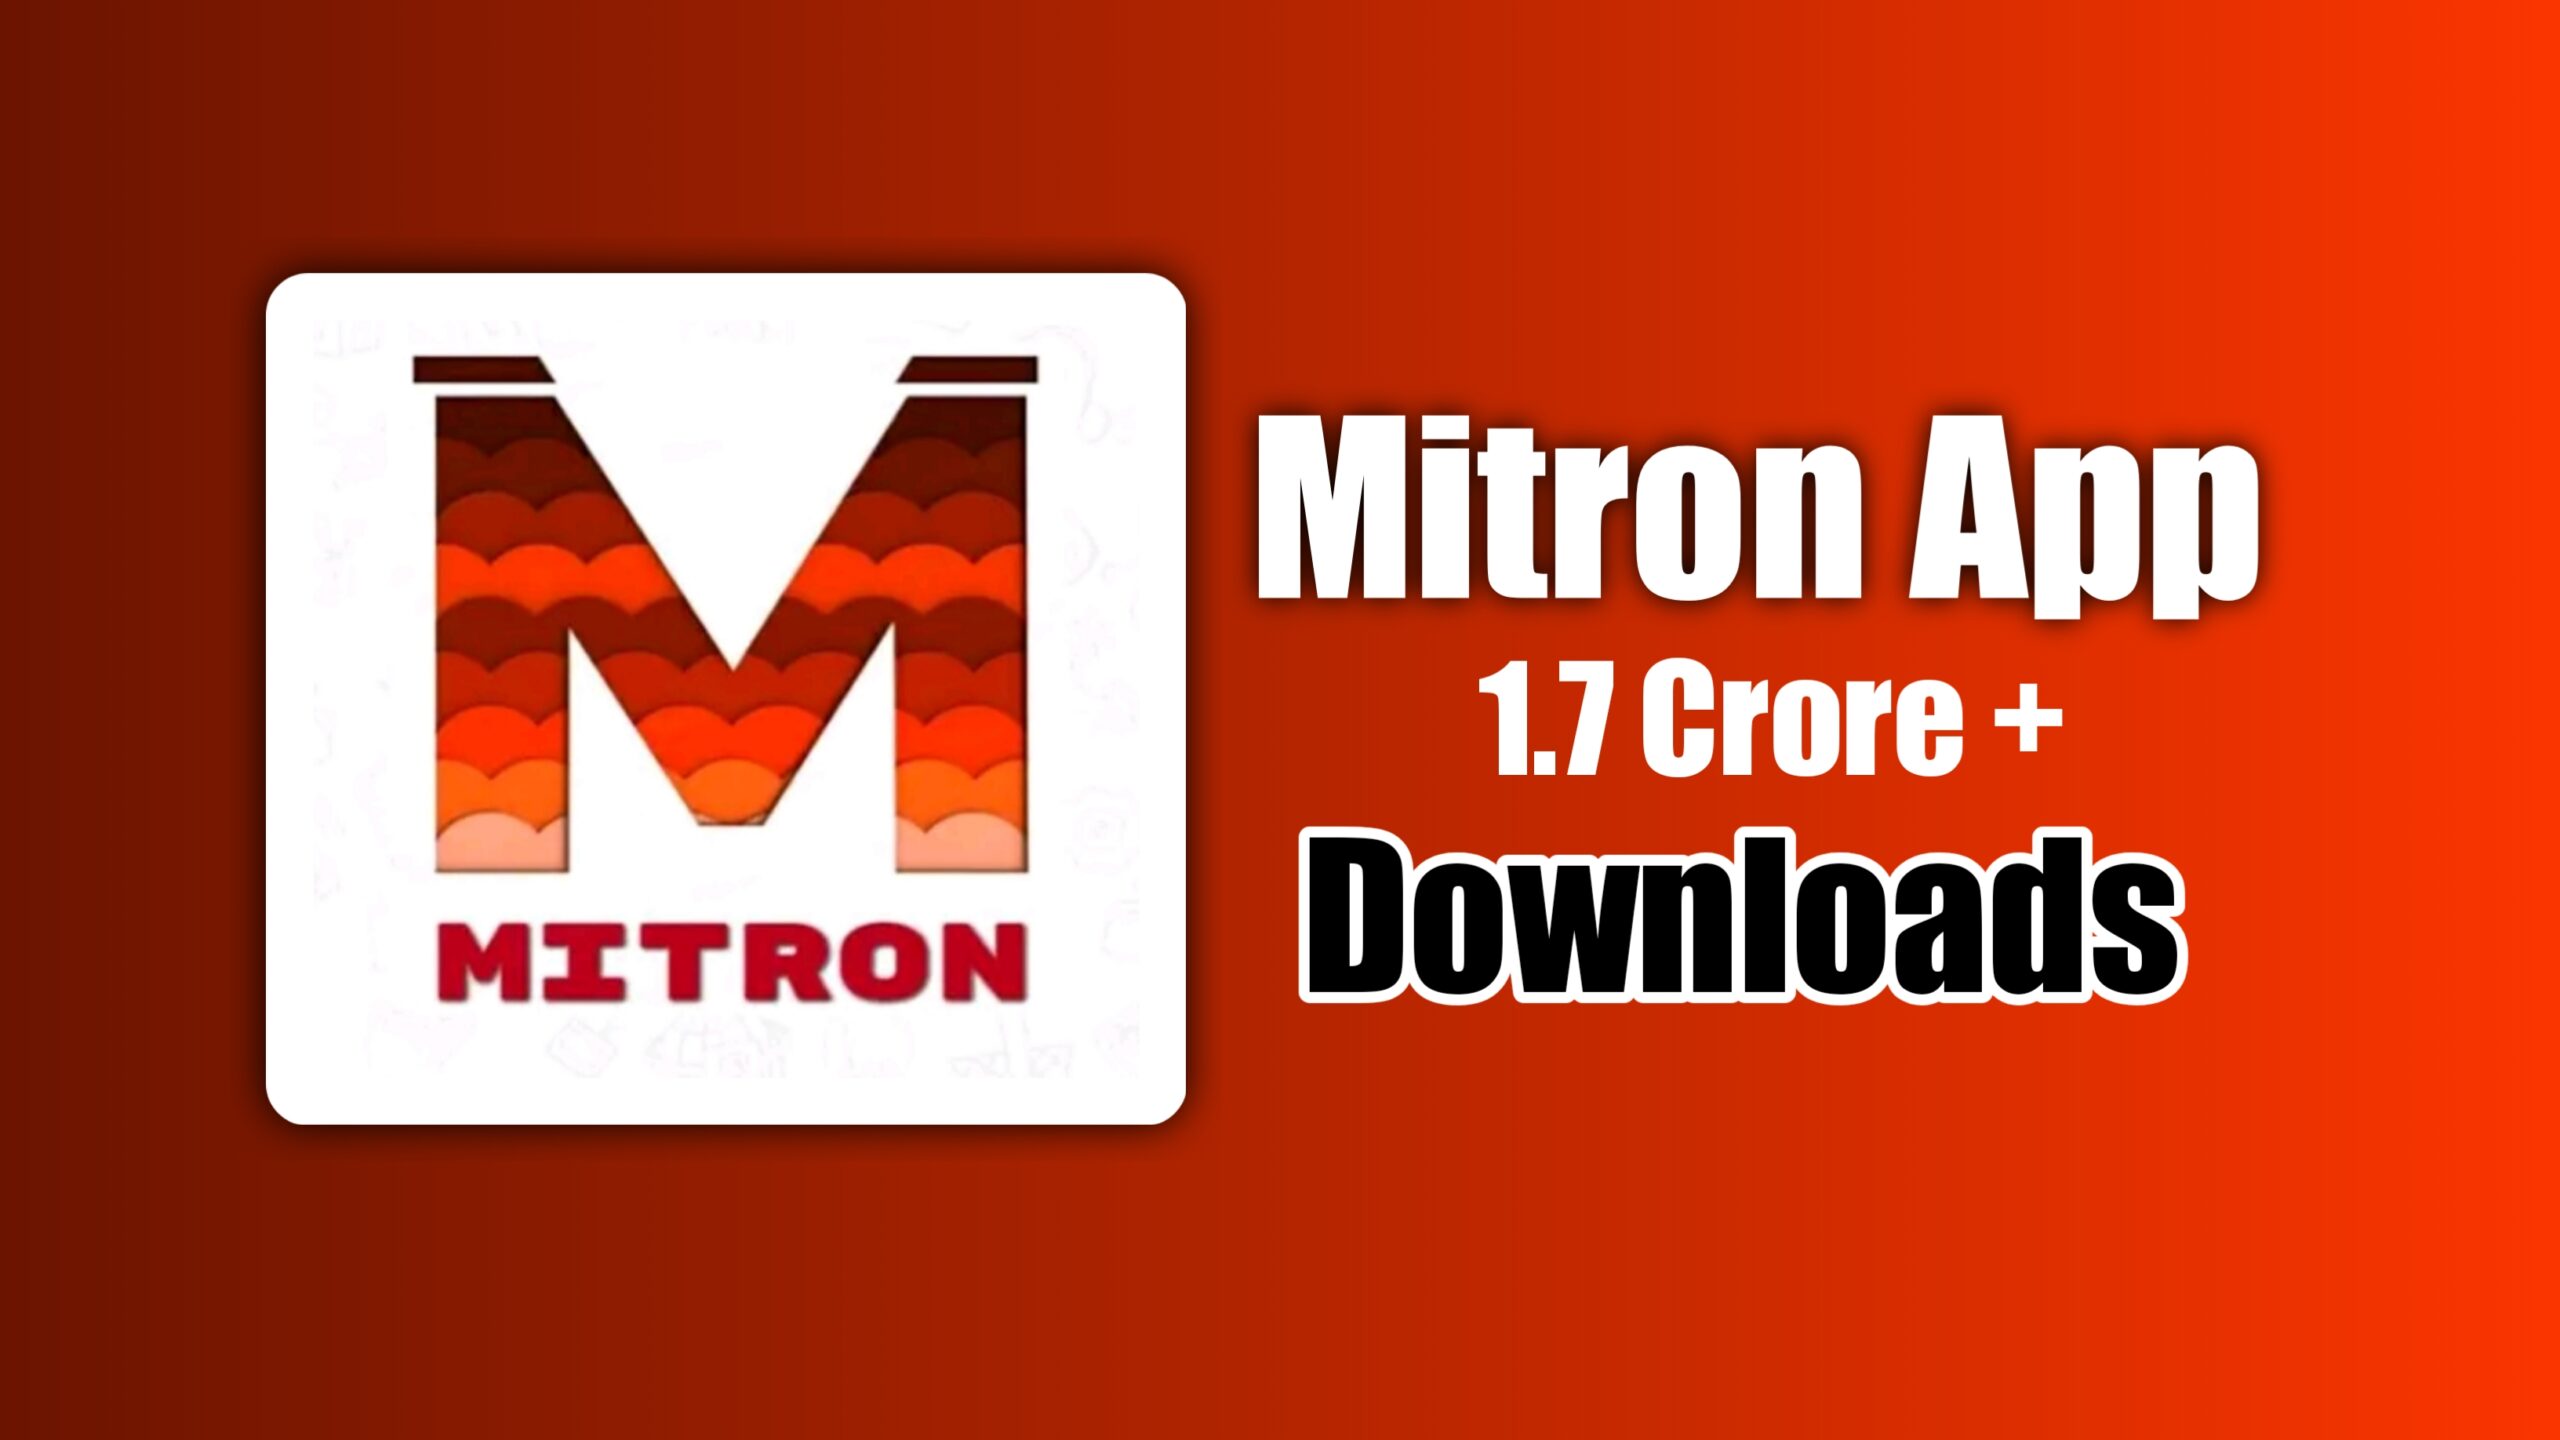 Mitron App crossed 1.7 Crore downloads and raises Rs 2 Crore seed funding